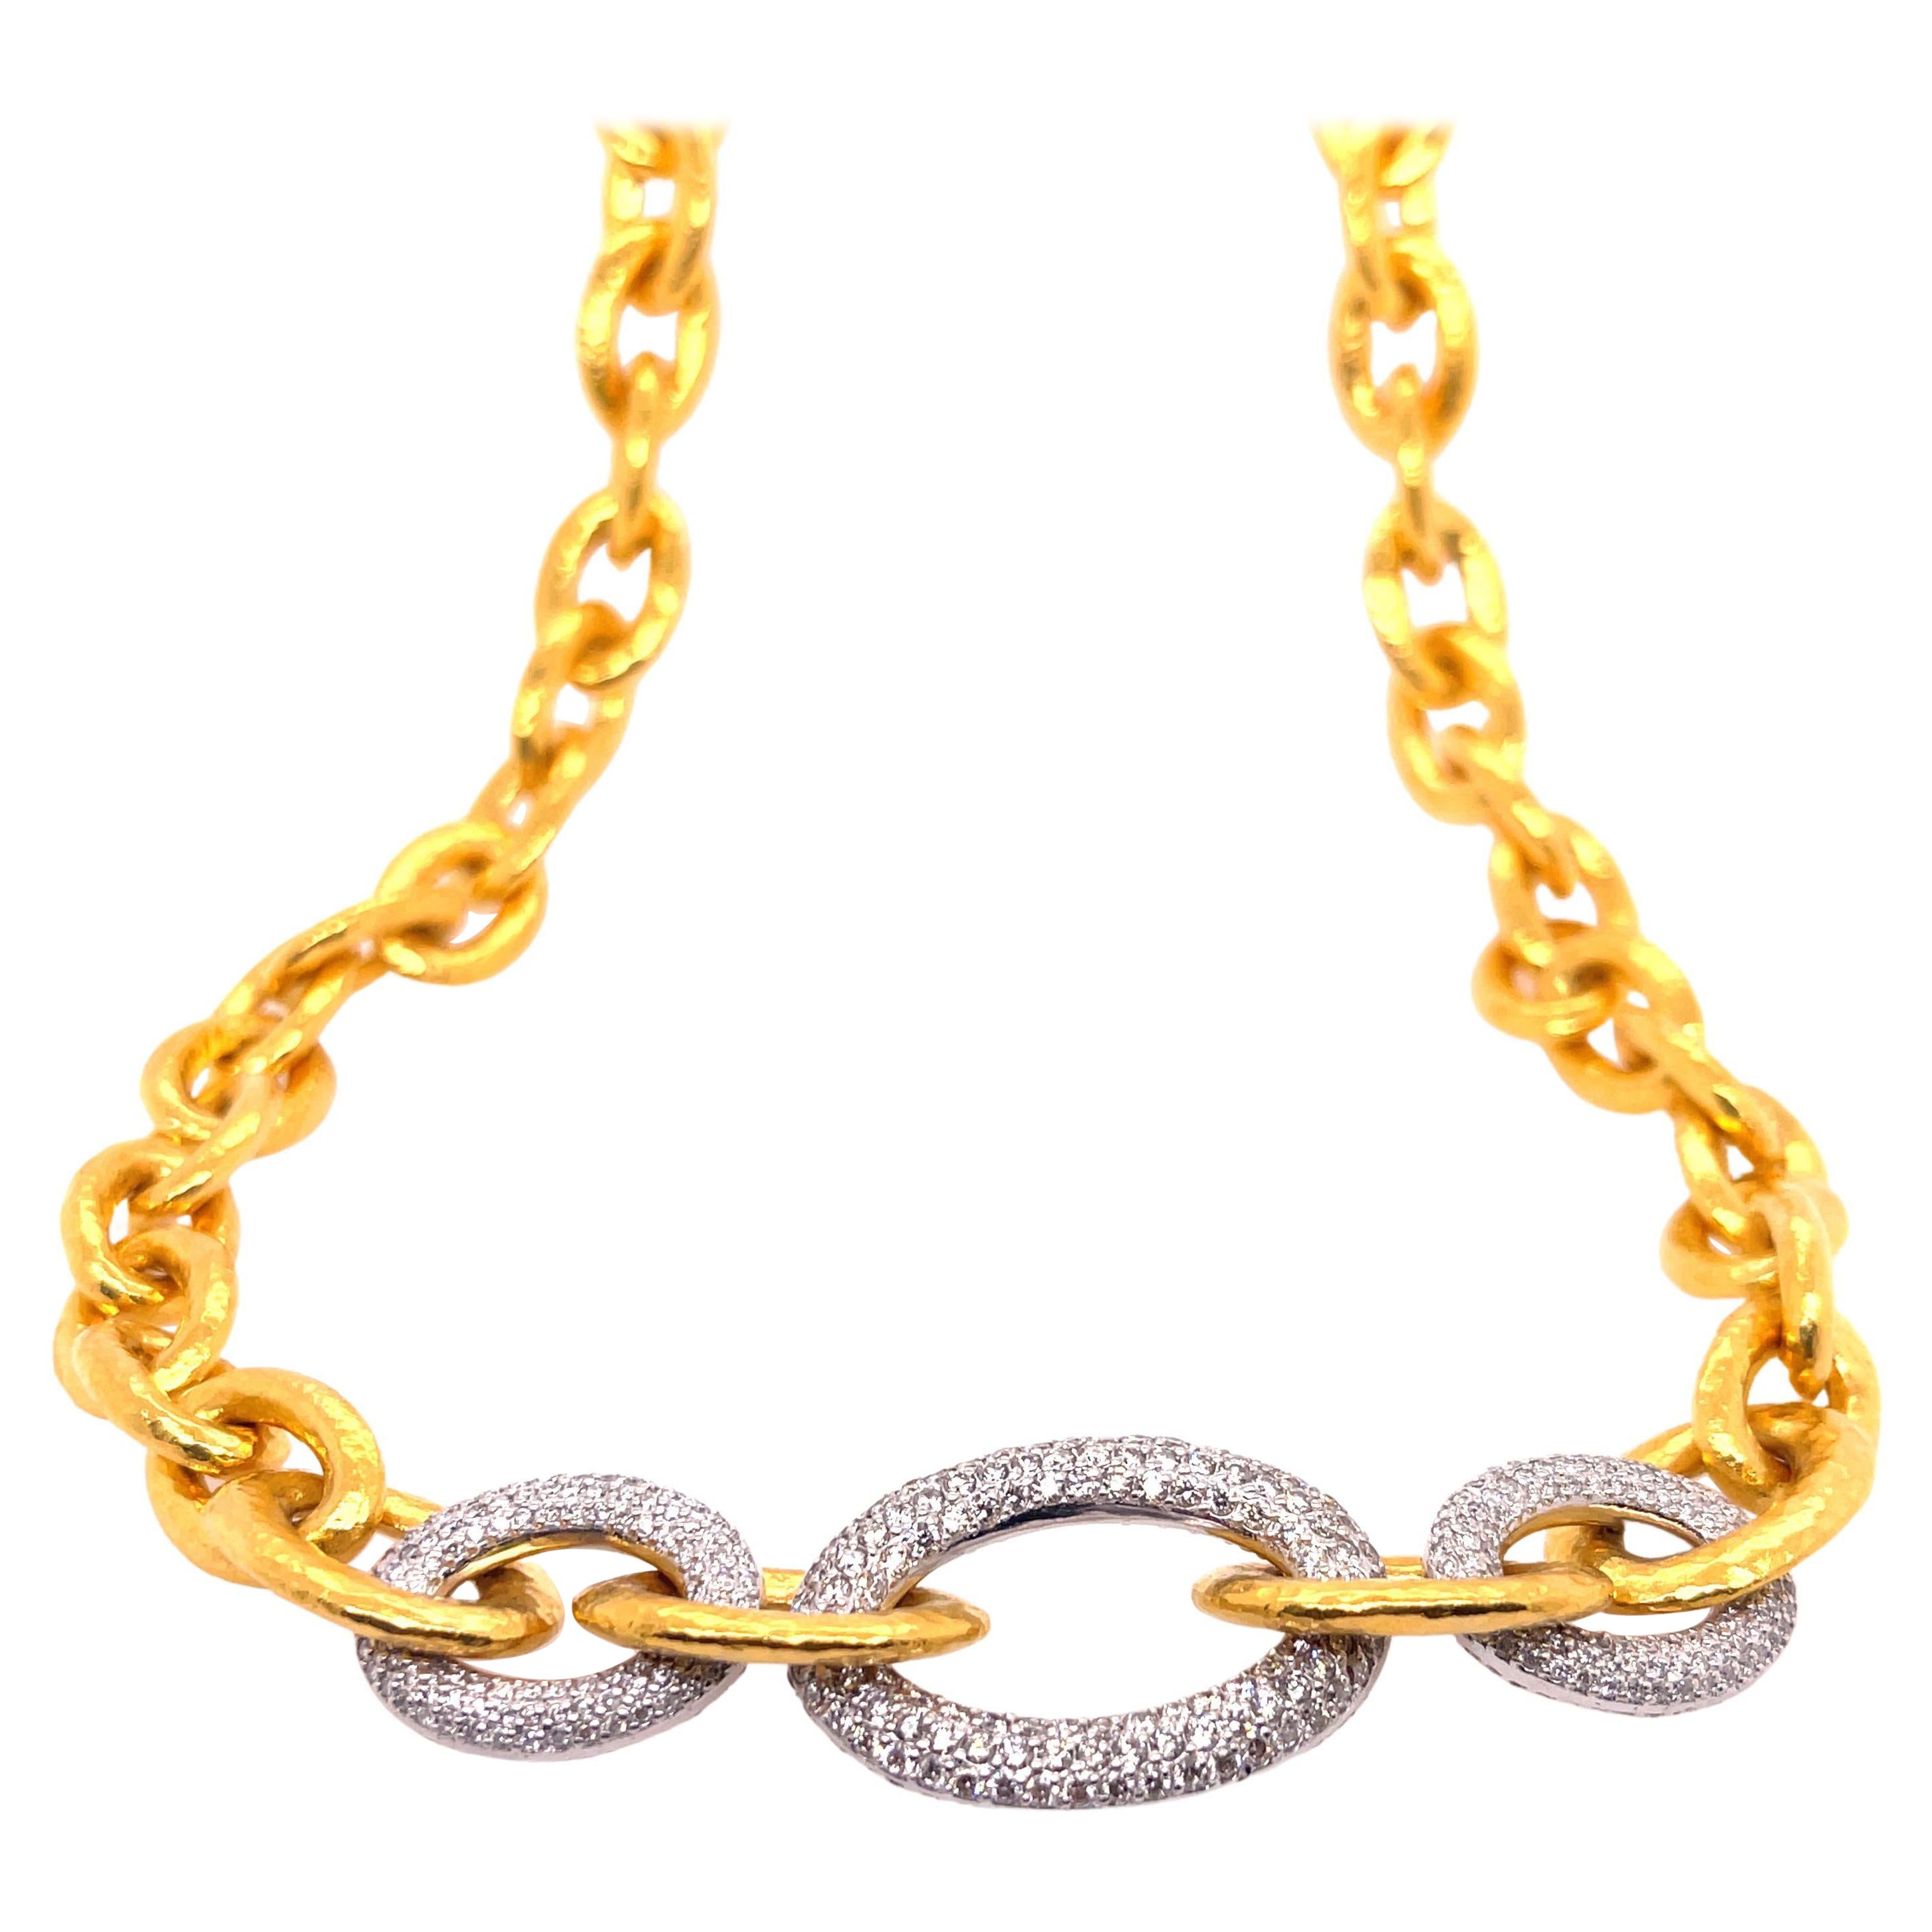 Gurhan Galahad Diamond Link Necklace 24K